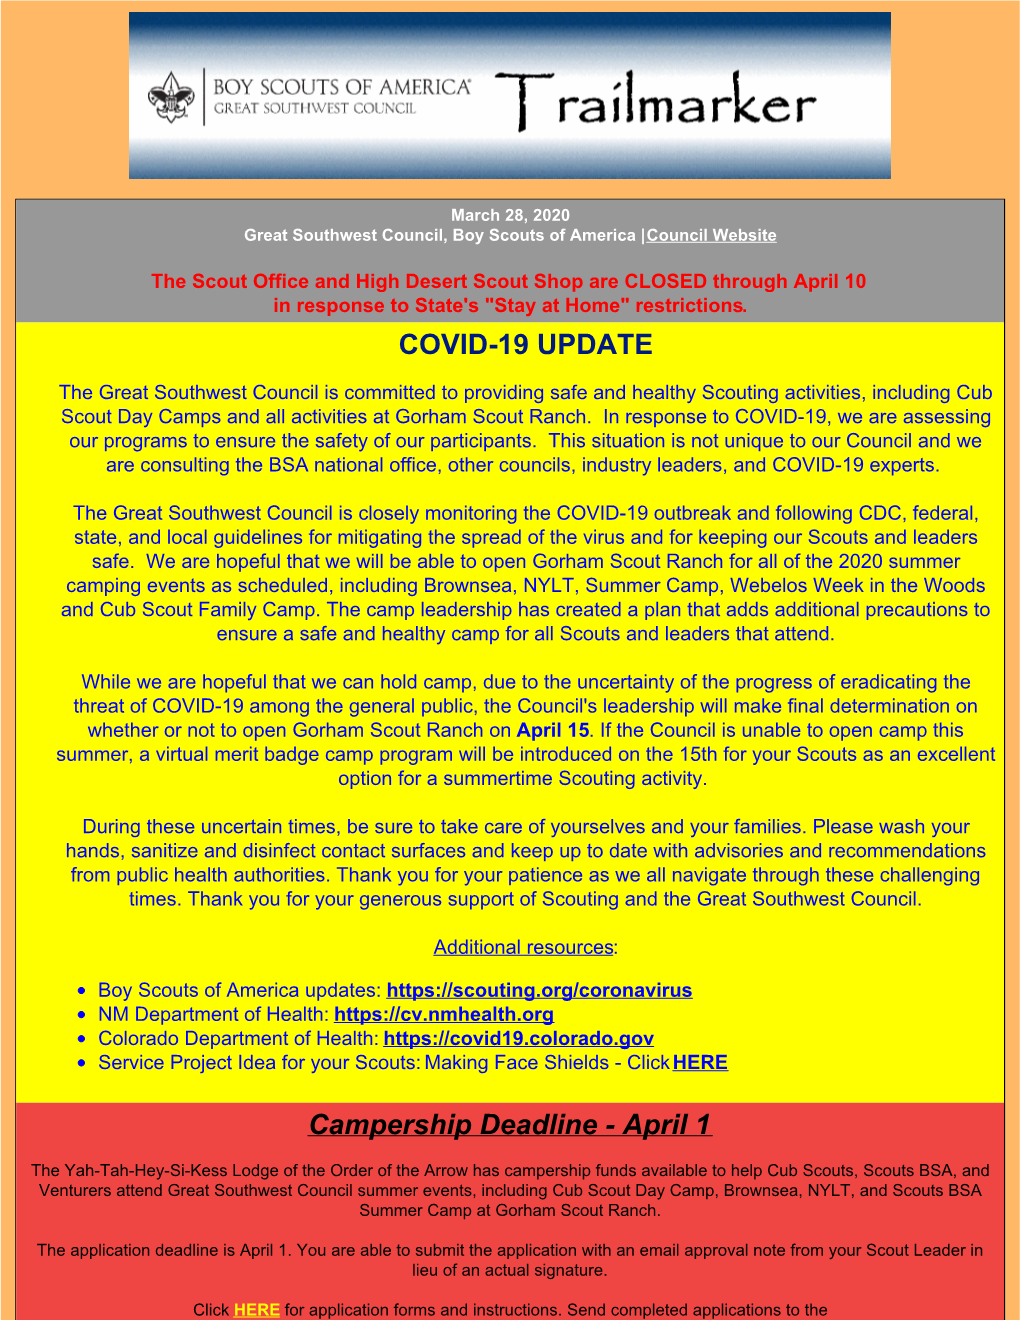 COVID-19 UPDATE Campership Deadline